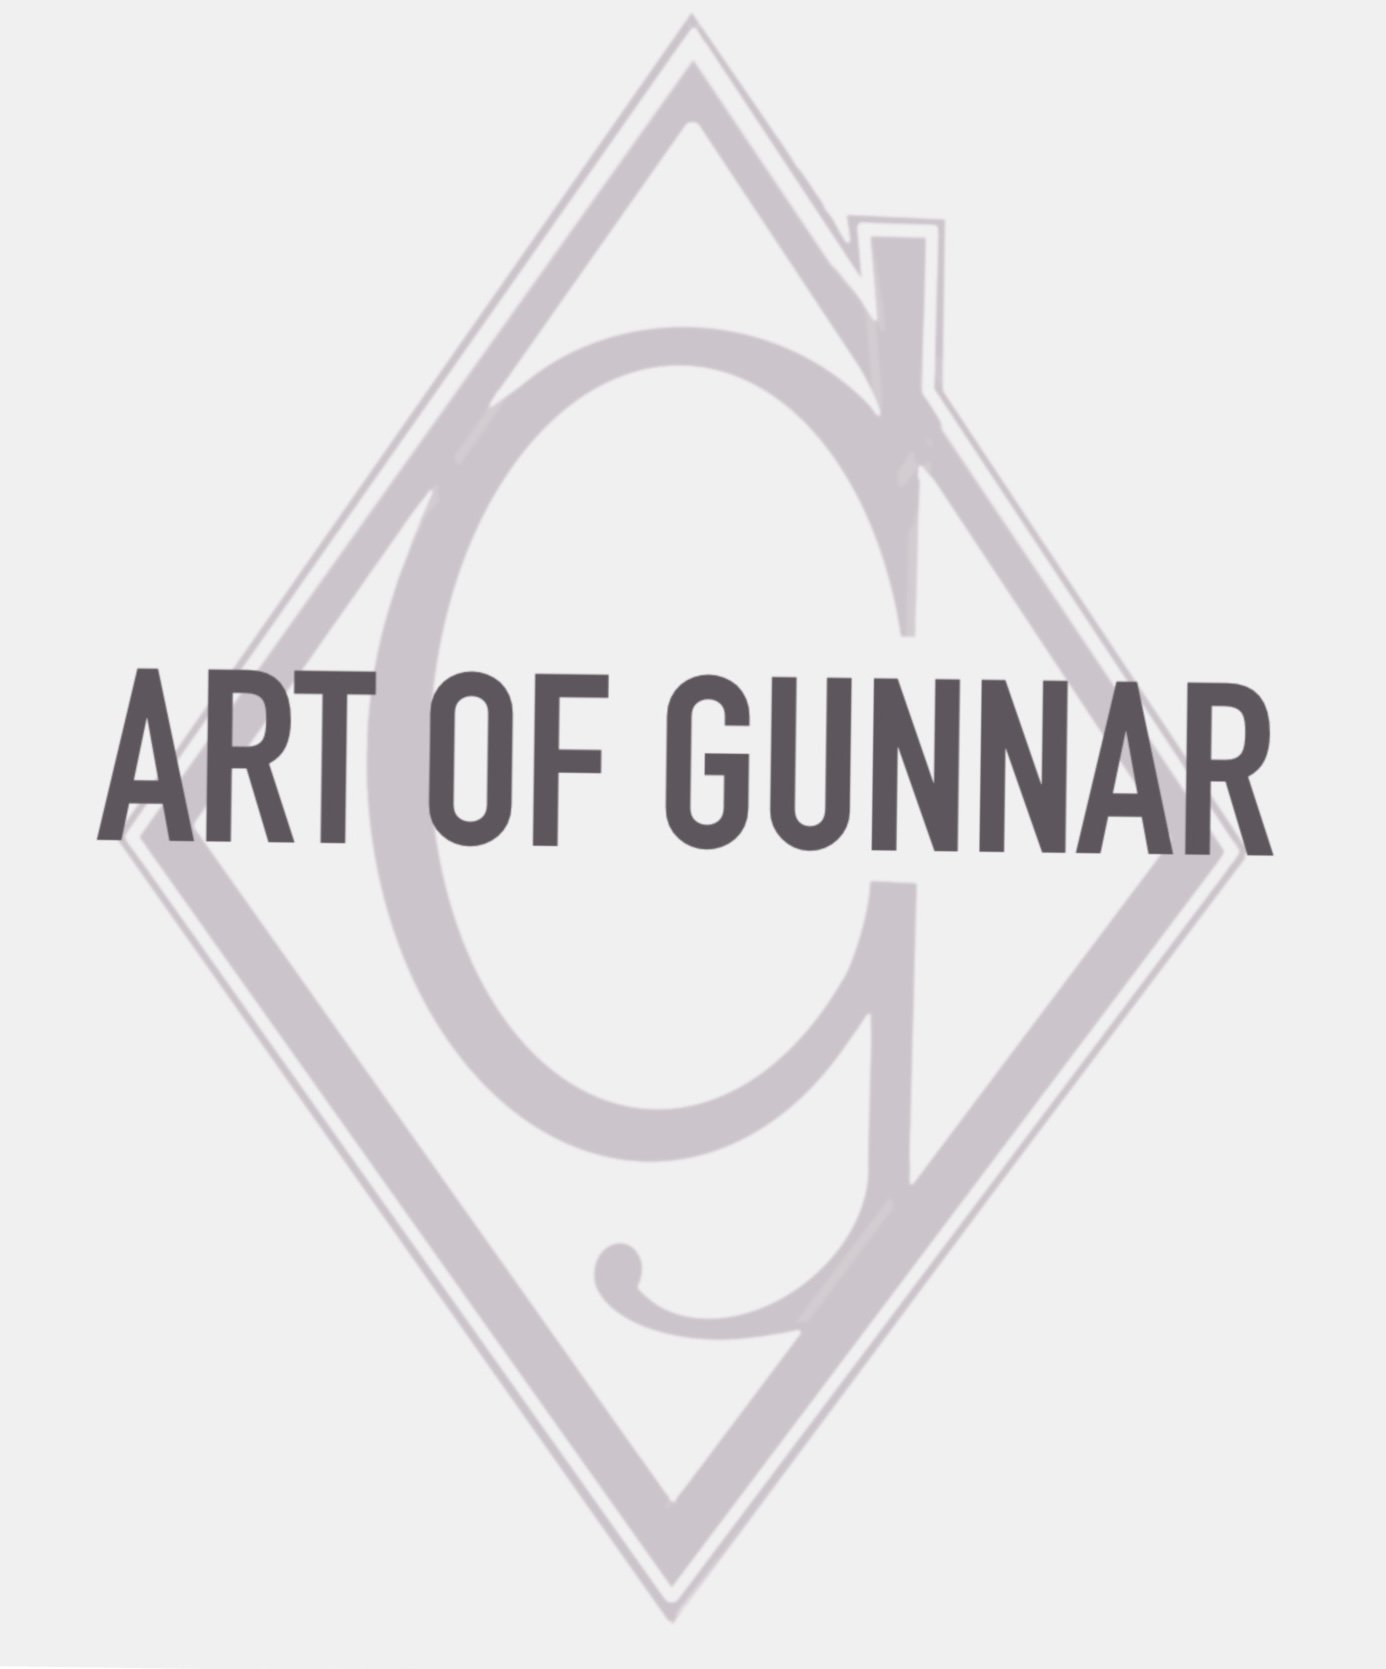 Art of Gunnar